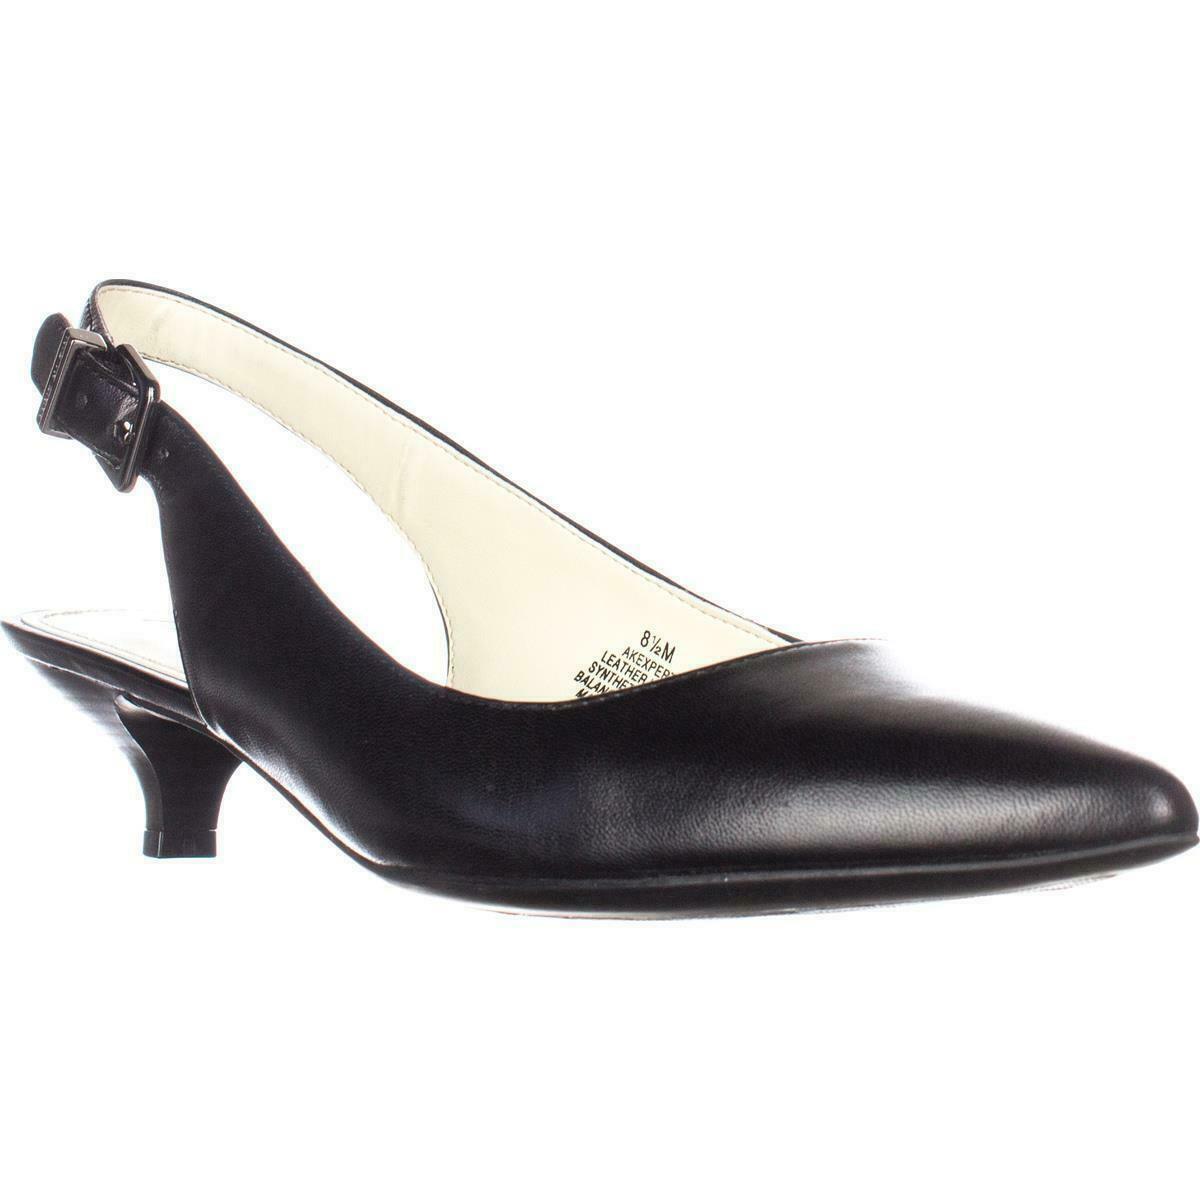 Anne Klein Expert Dress Kitten Heels Pumps, Black Leather, 6.5 US - Heels